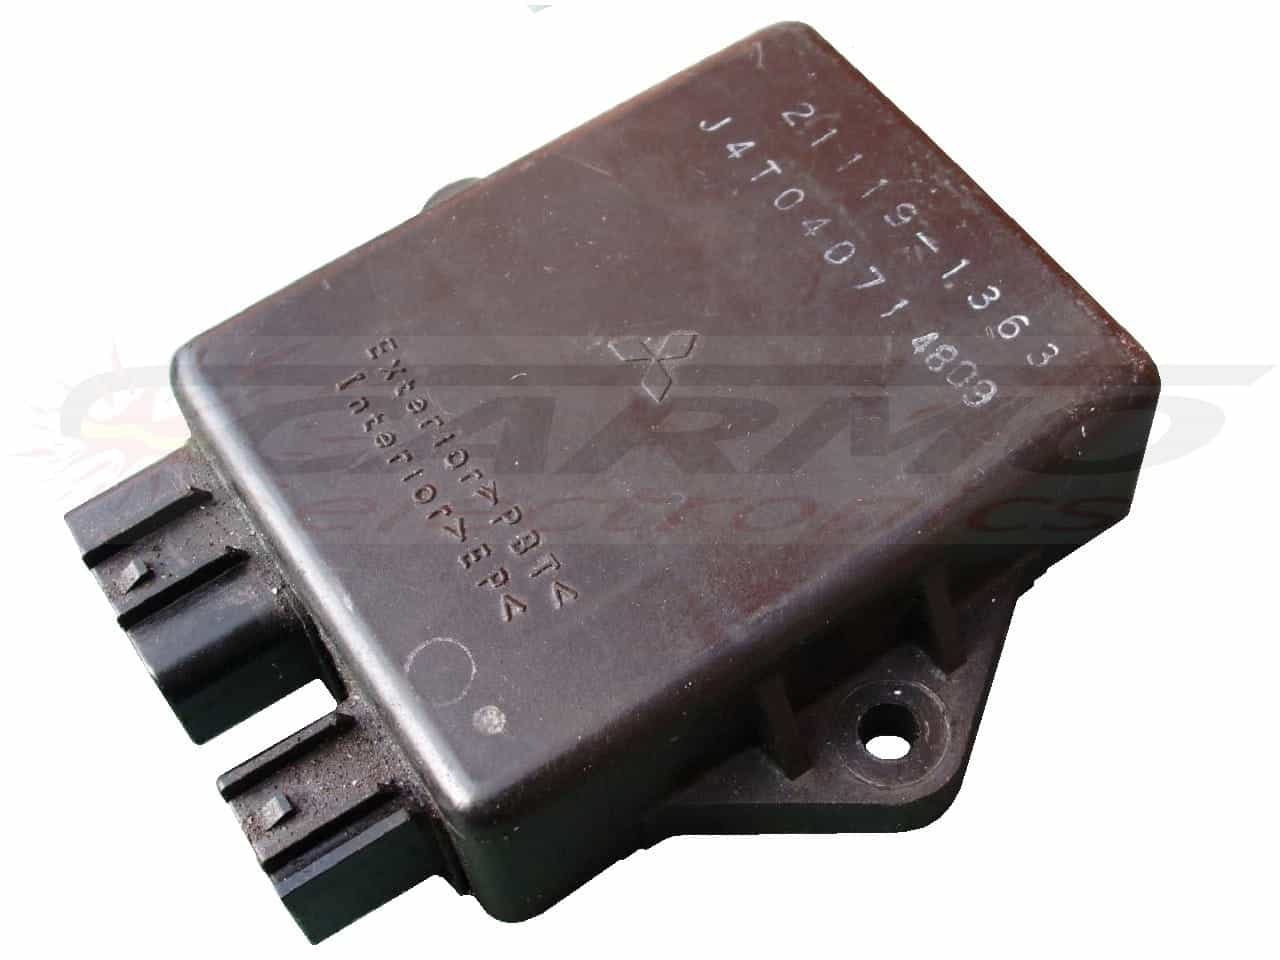 ZXR750 CDI TCI ECU ignitor ignition unit module (21119-1365, 21119-1363)